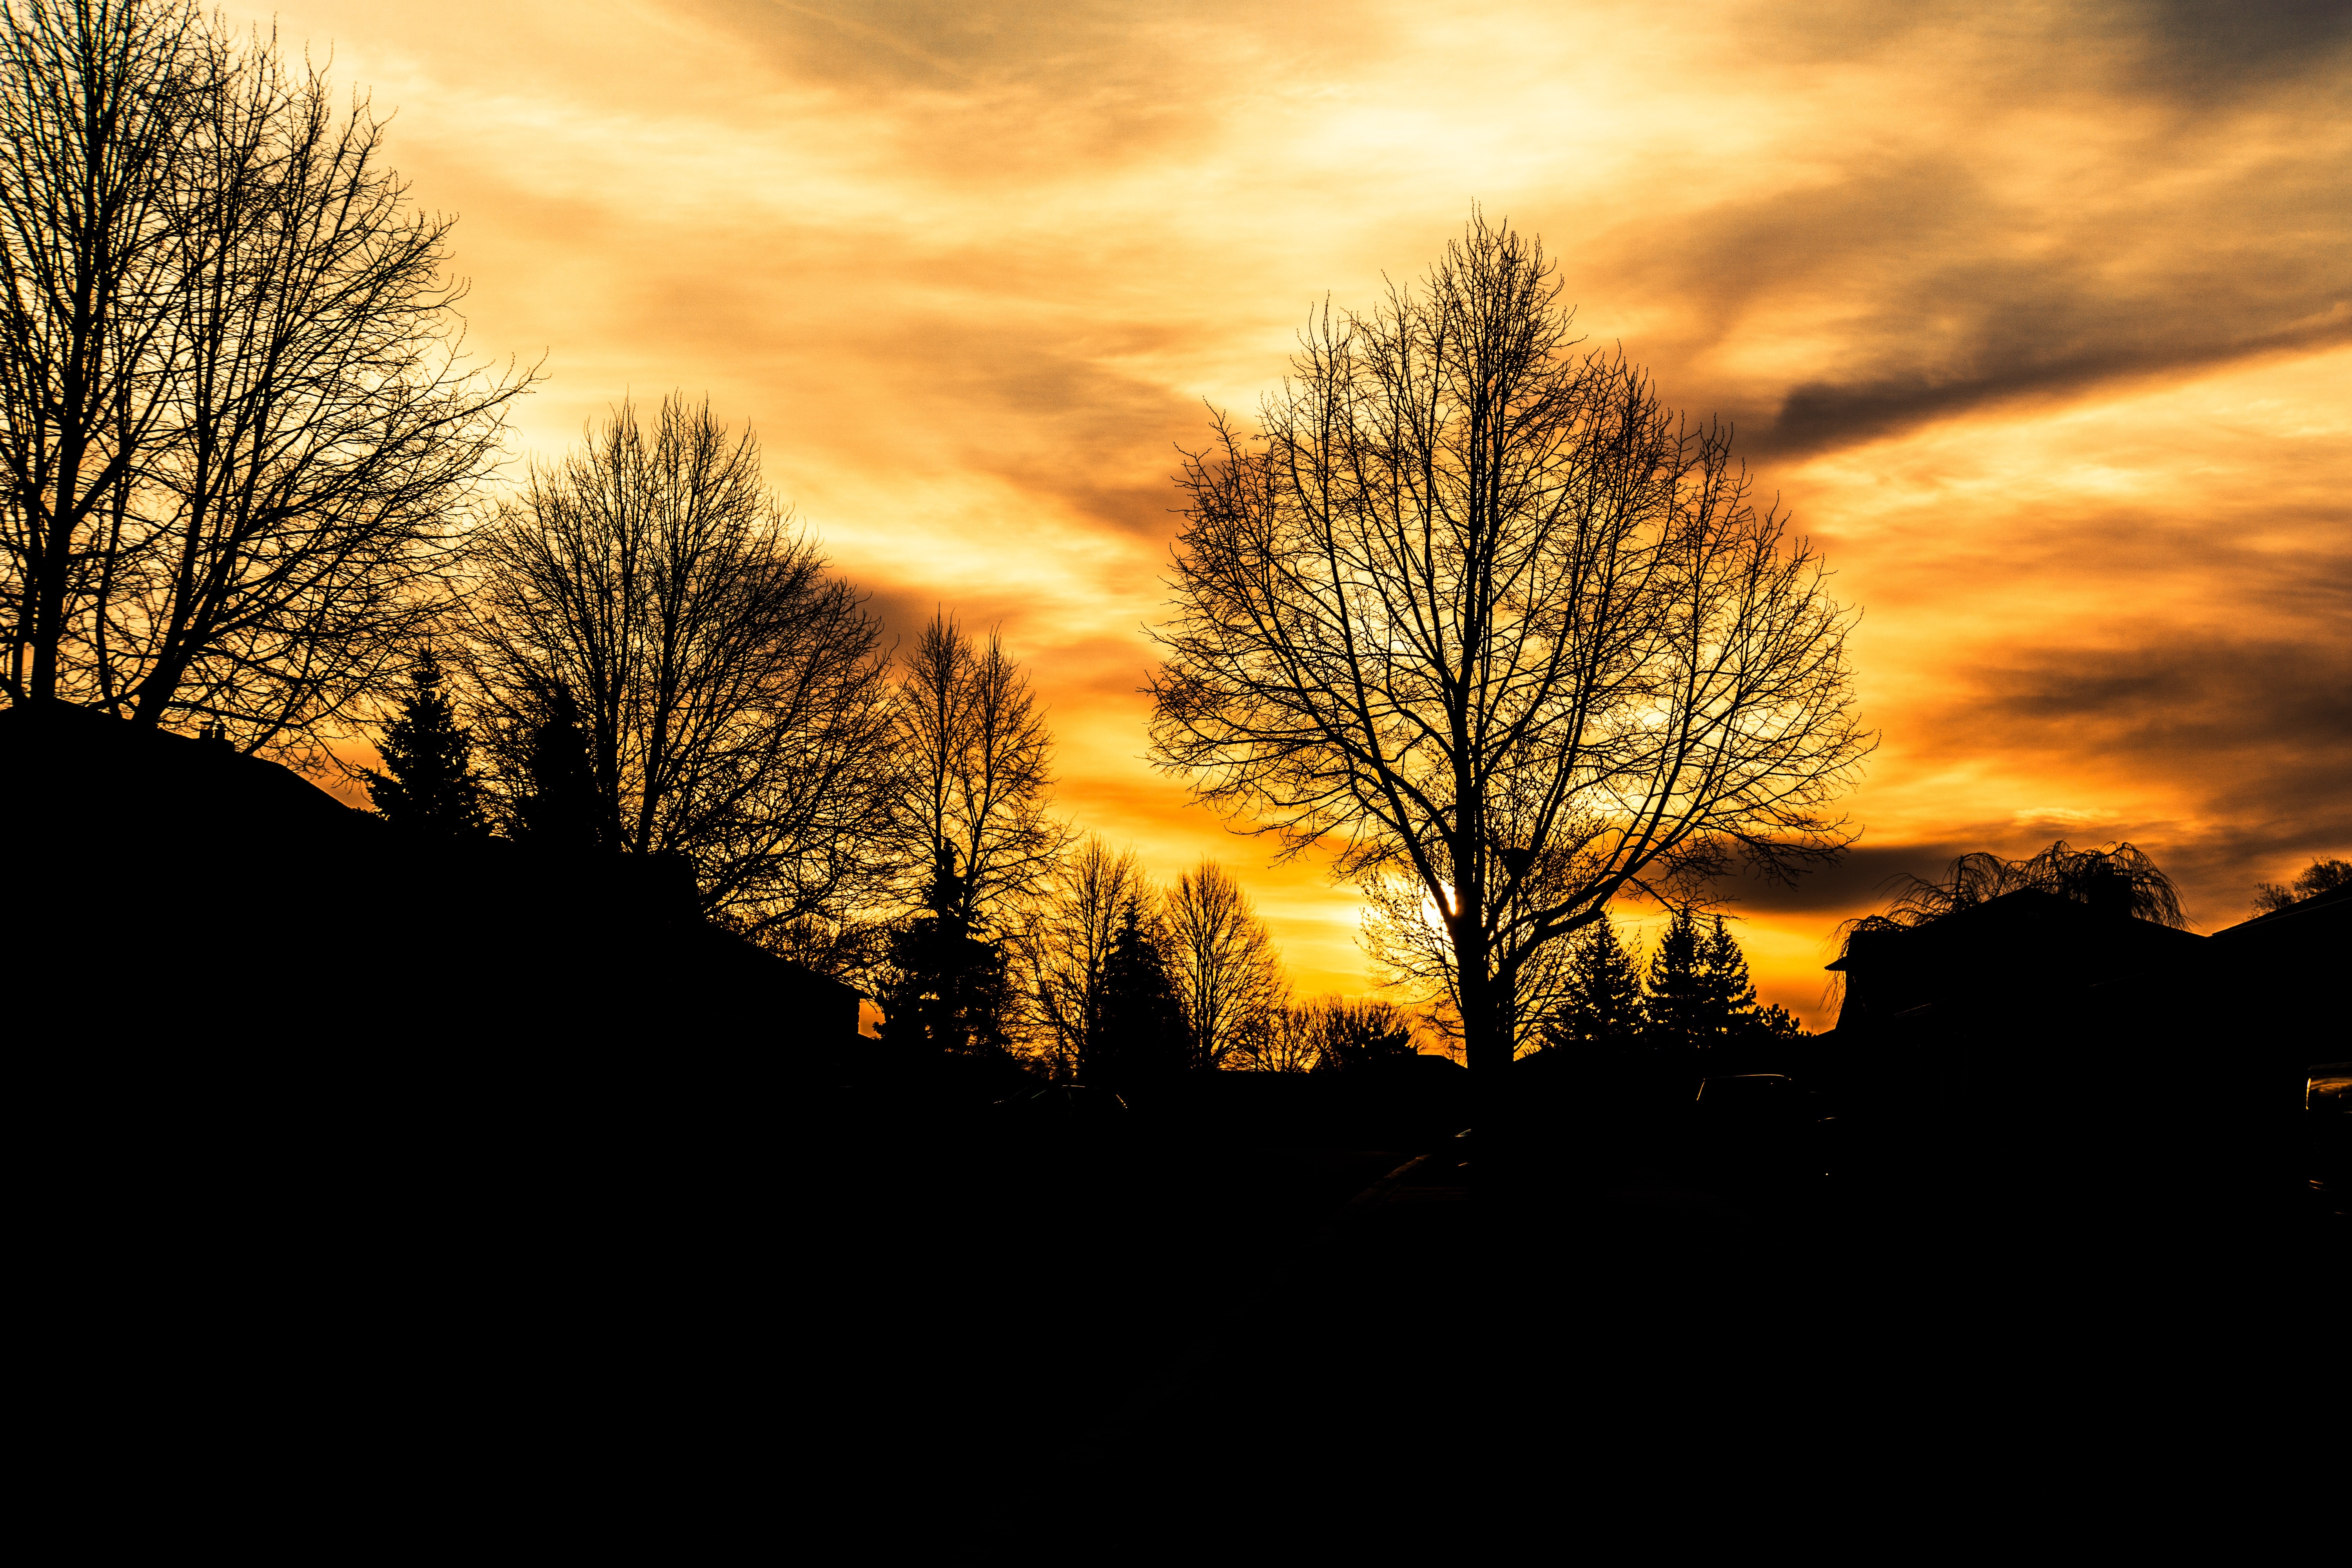 Sunrise, Hope, Brightness, Landscape, silhouette, tree